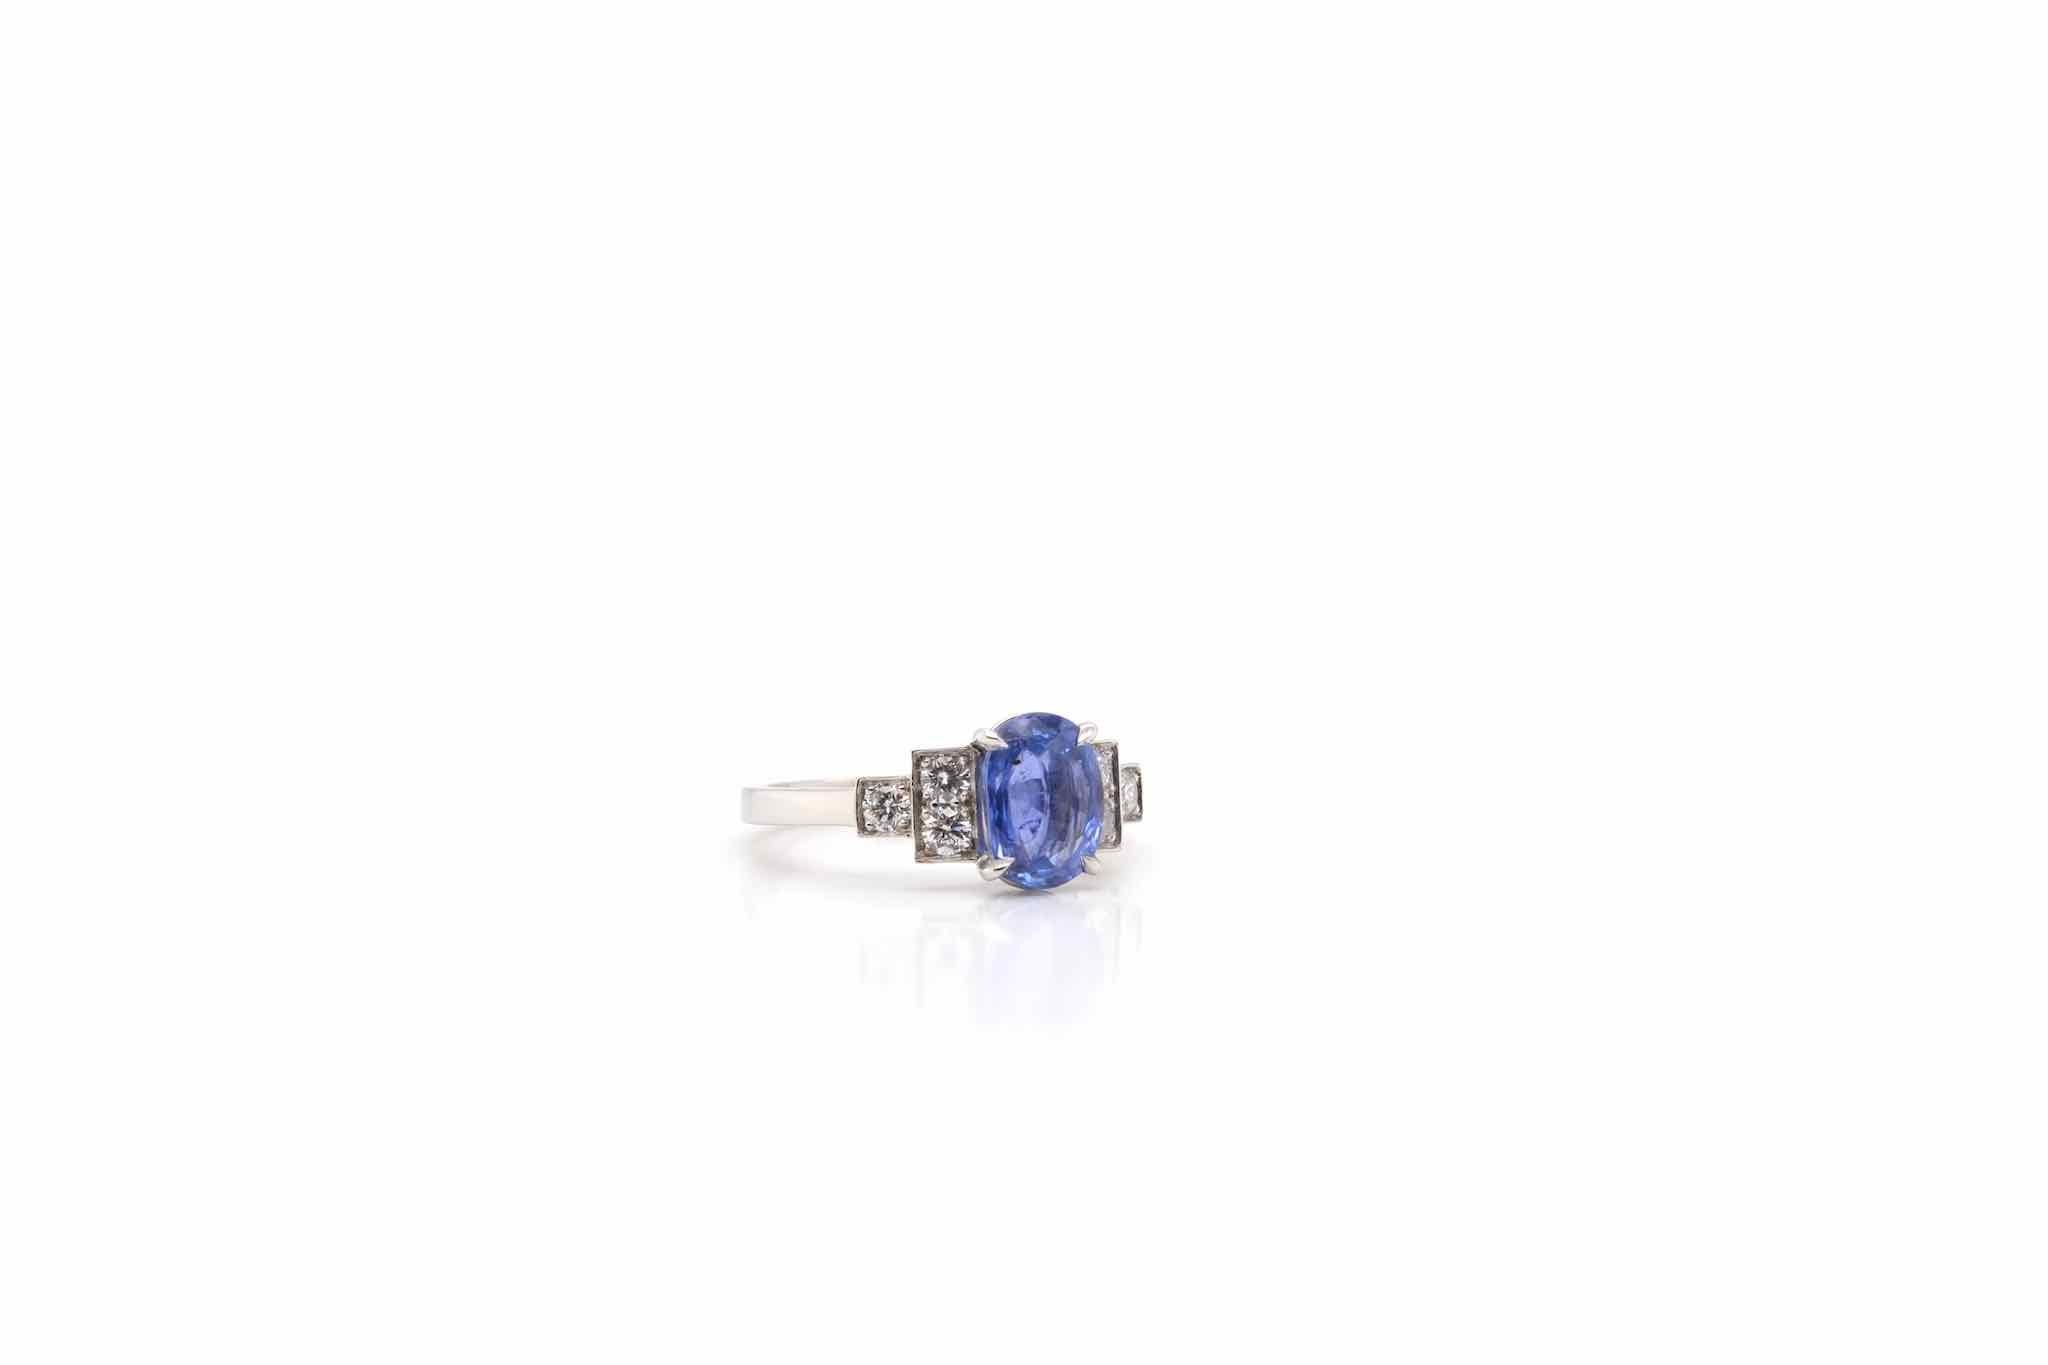 Art Deco 2.14 carats ceylon sapphire ring with brilliant cut diamonds